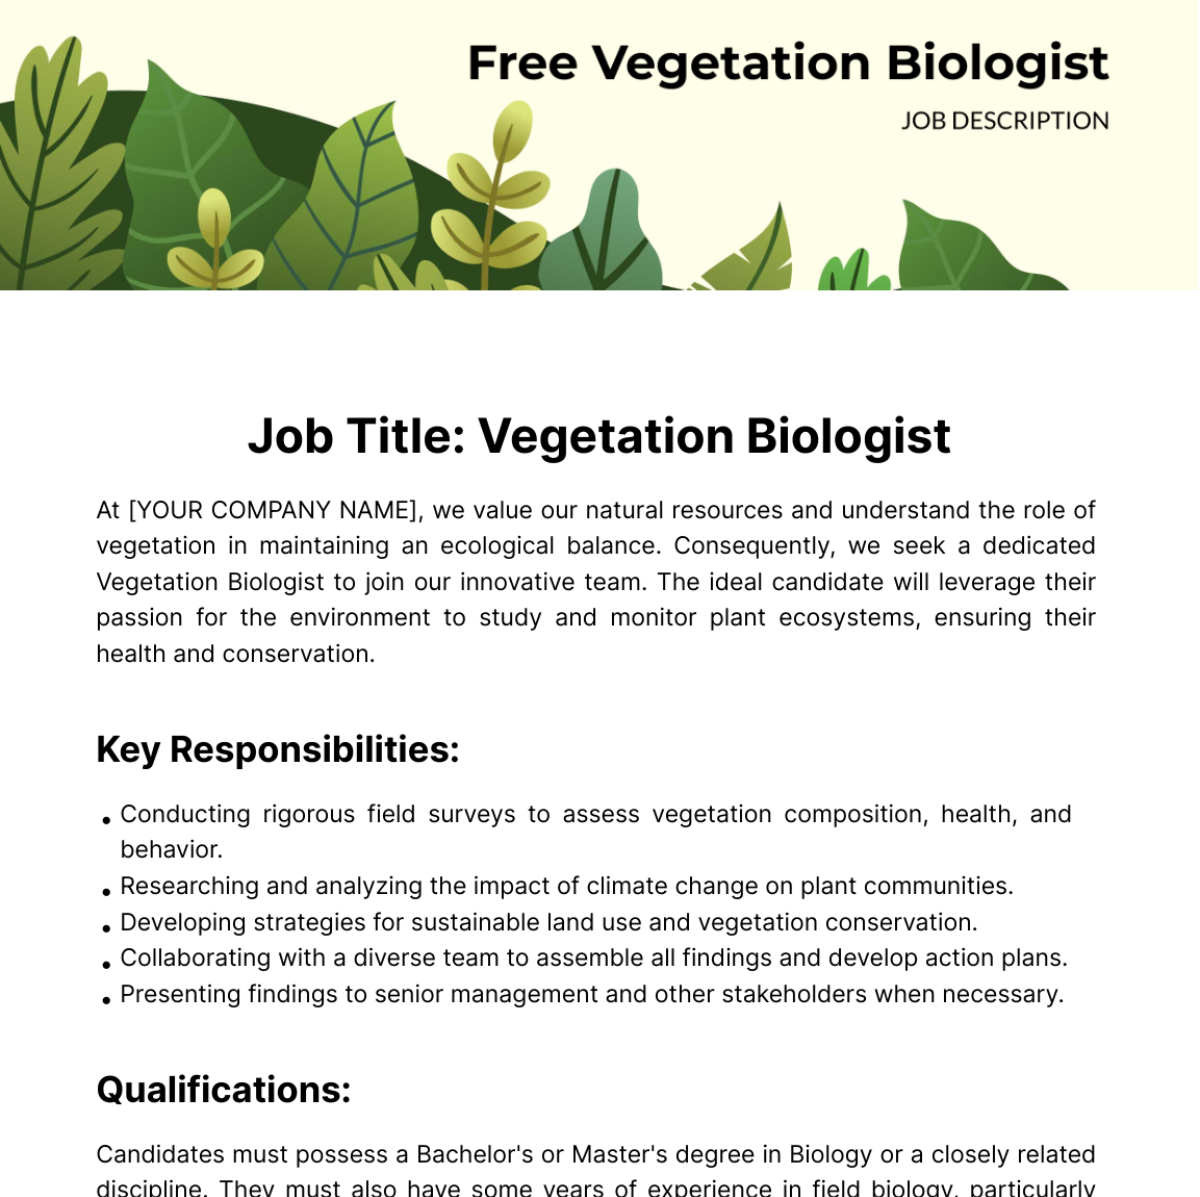 Free Vegetation Biologist Job Description Template